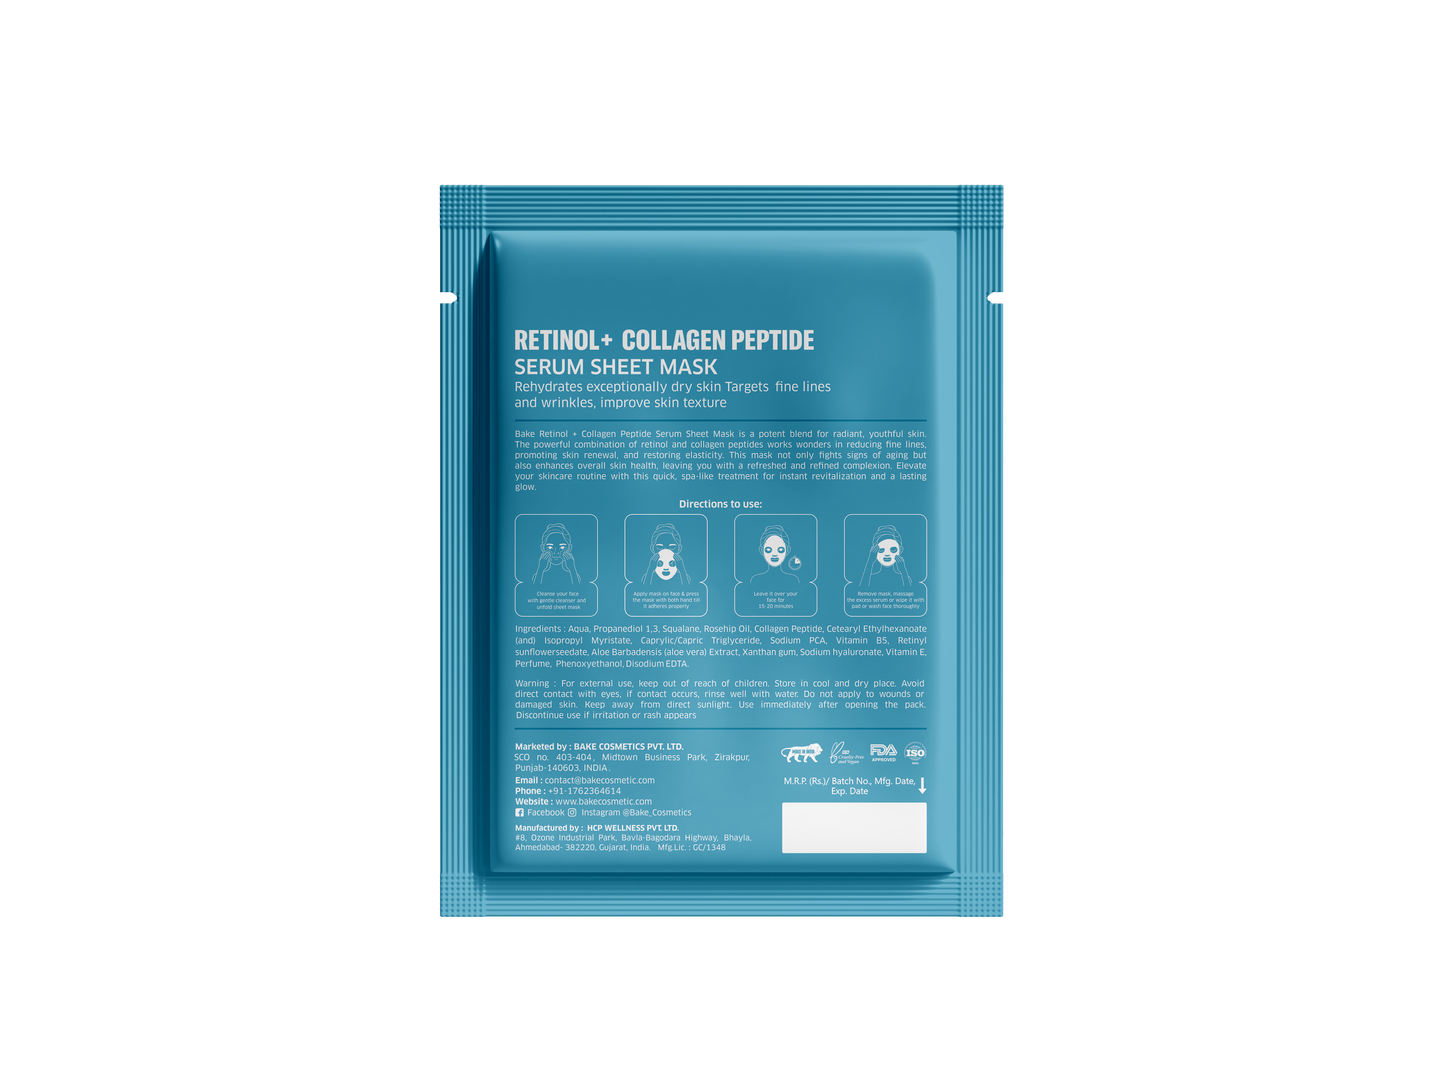 Retinol + Collagen Peptide Serum Sheet Mask